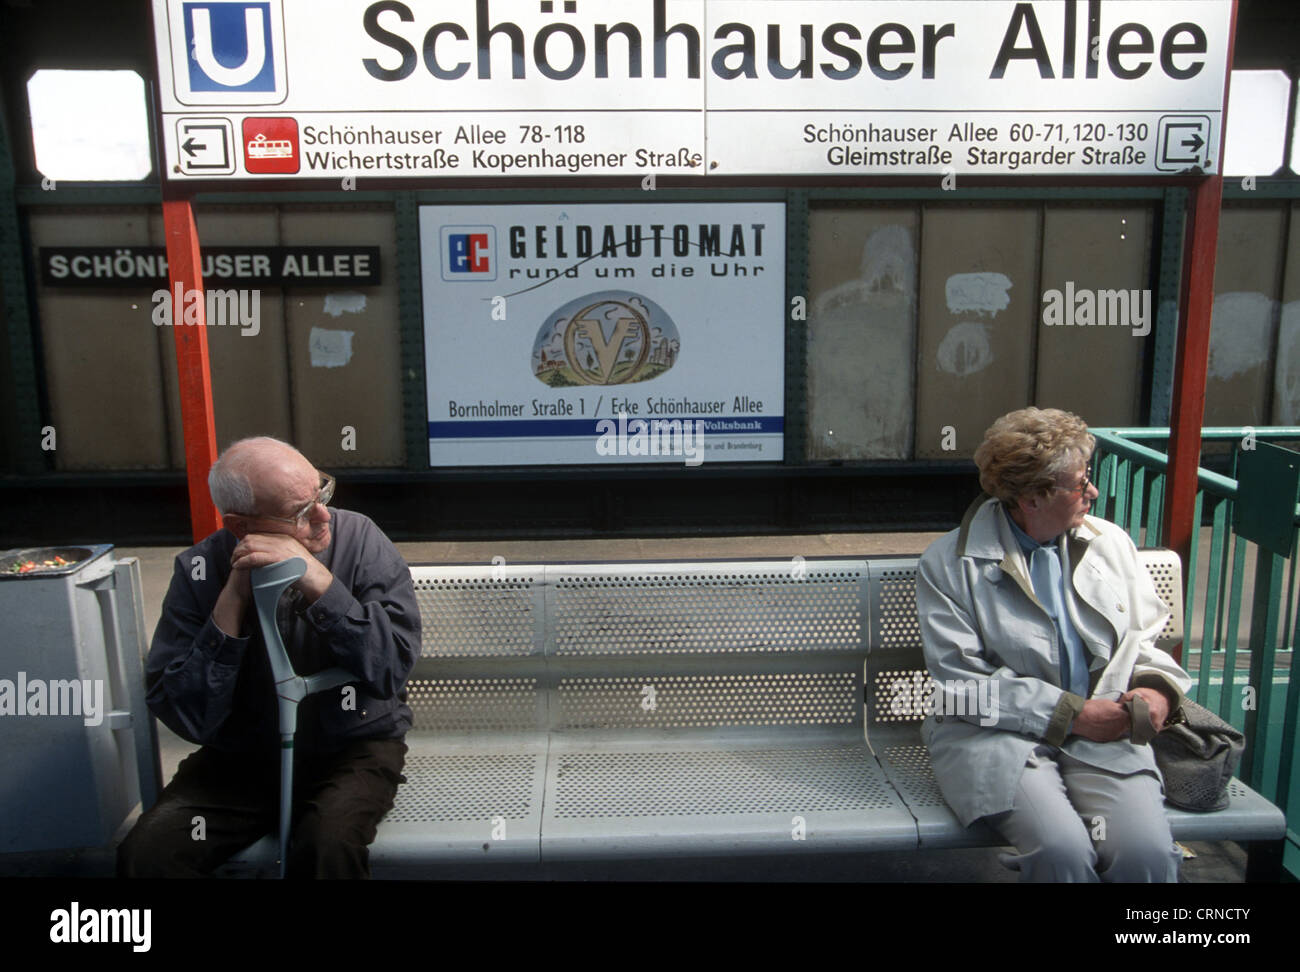 Subway station Schoenhauser Allee in Berlin Stock Photo